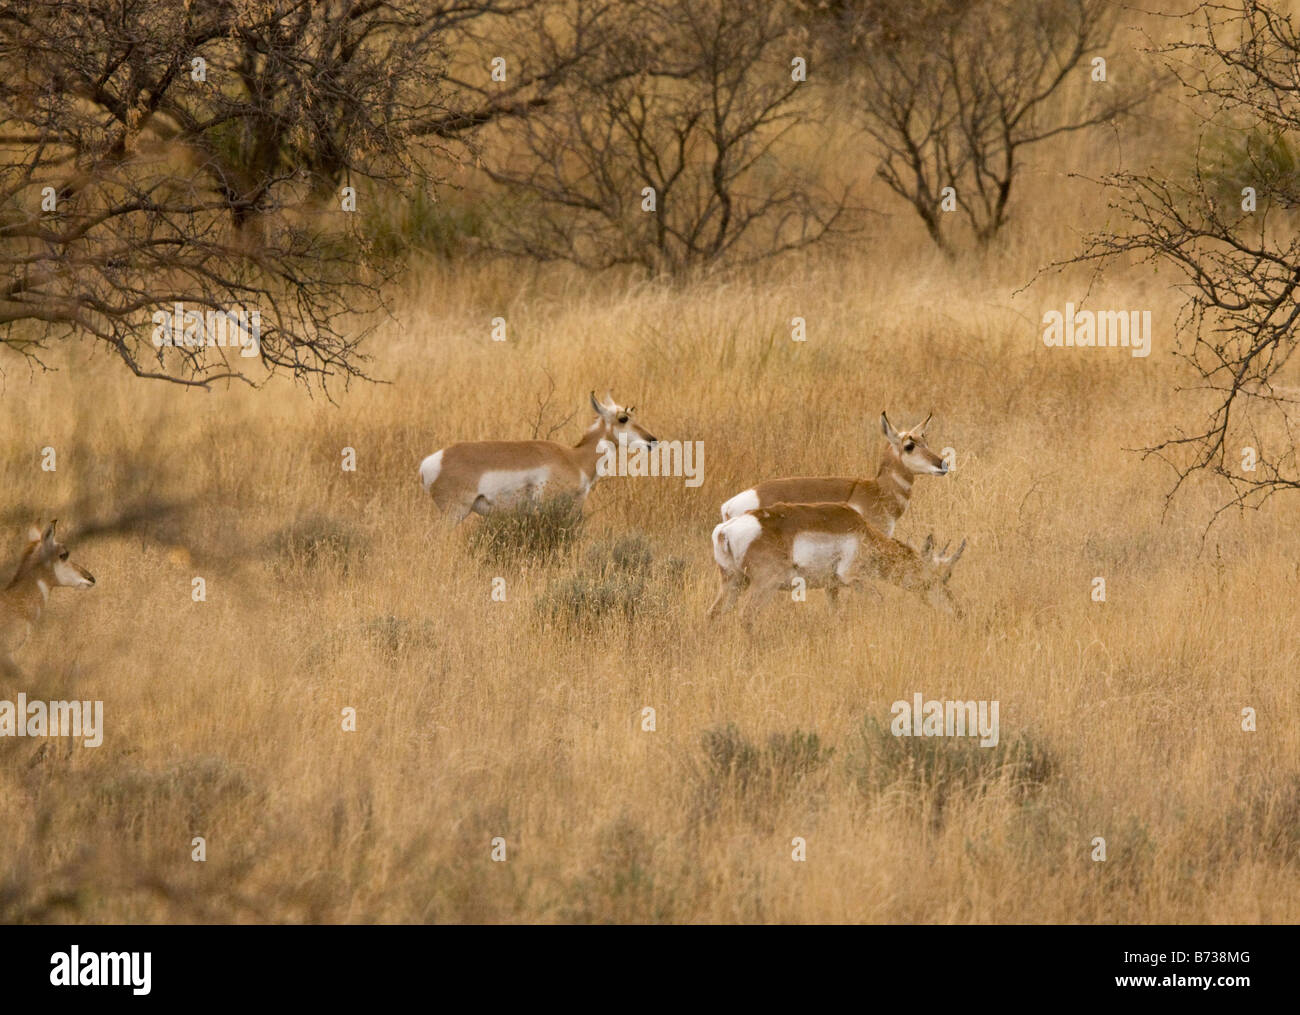 Pronghorn herd Antilocapra americana also known as pronghorn antelope or prong buck savannah grasslands of south east Arizona US Stock Photo